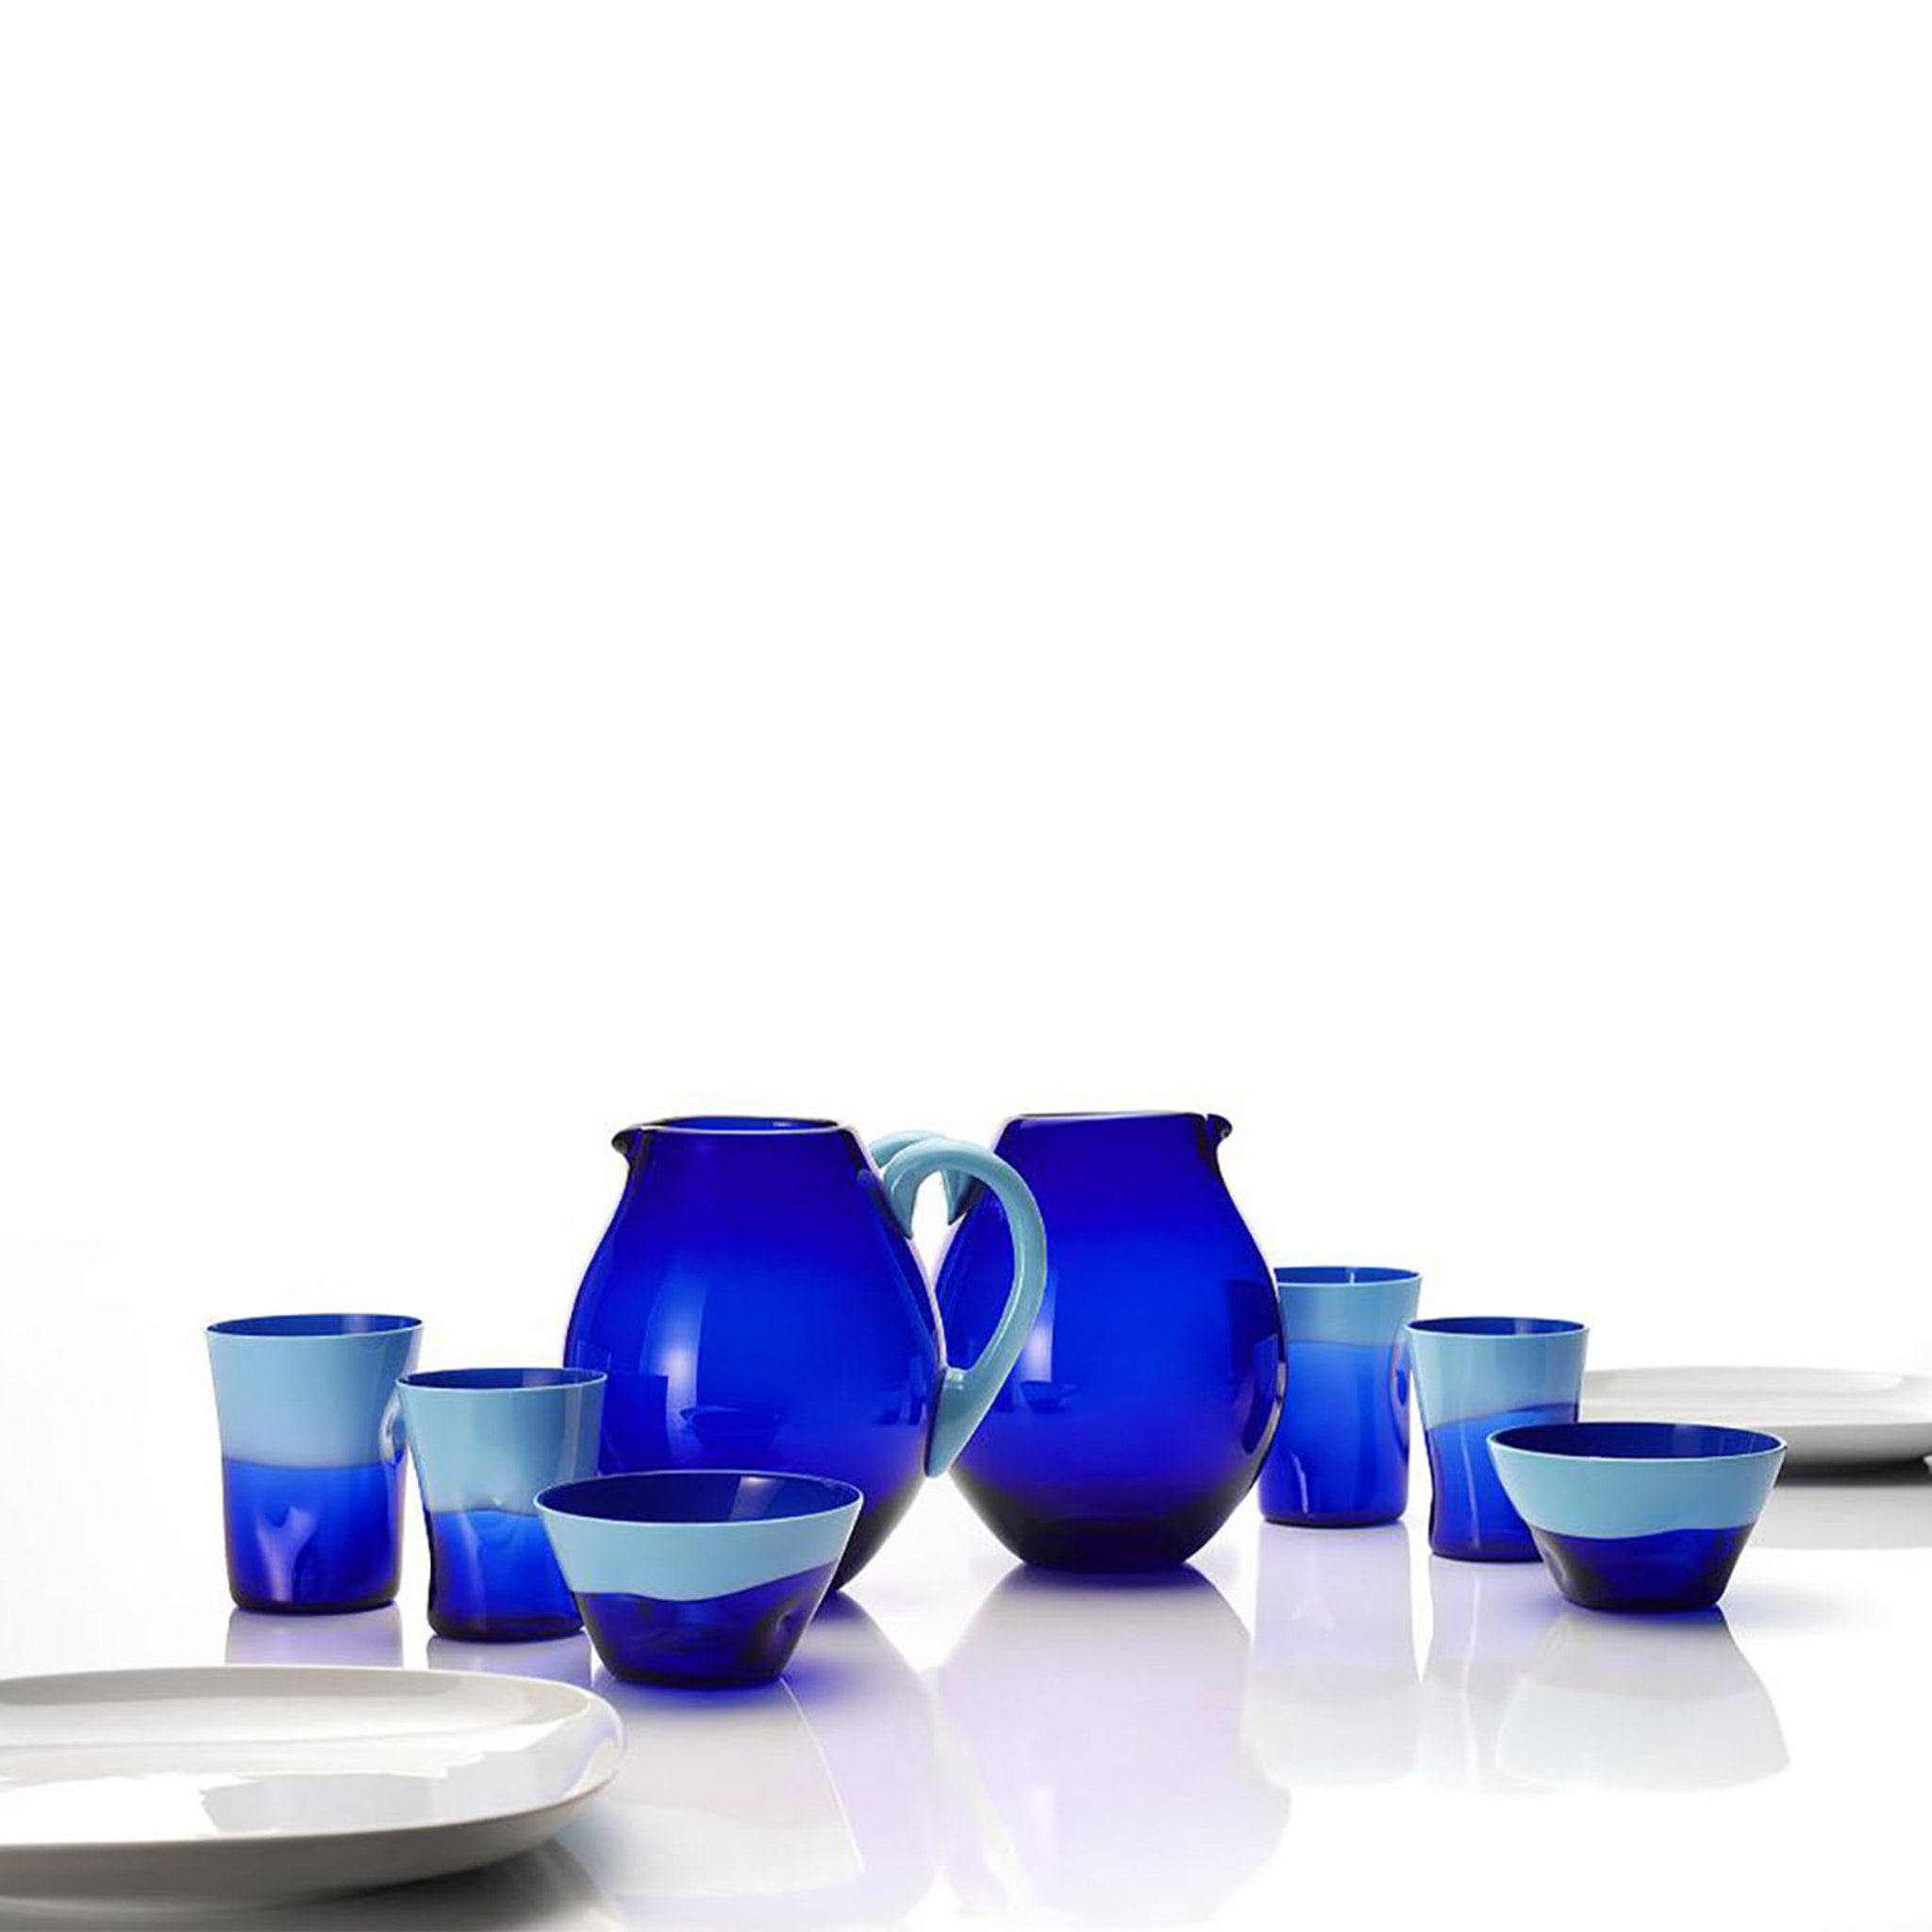 Dandy Small Light-Blue & Blue Bowl by Stefano Marcato - Alternative view 1